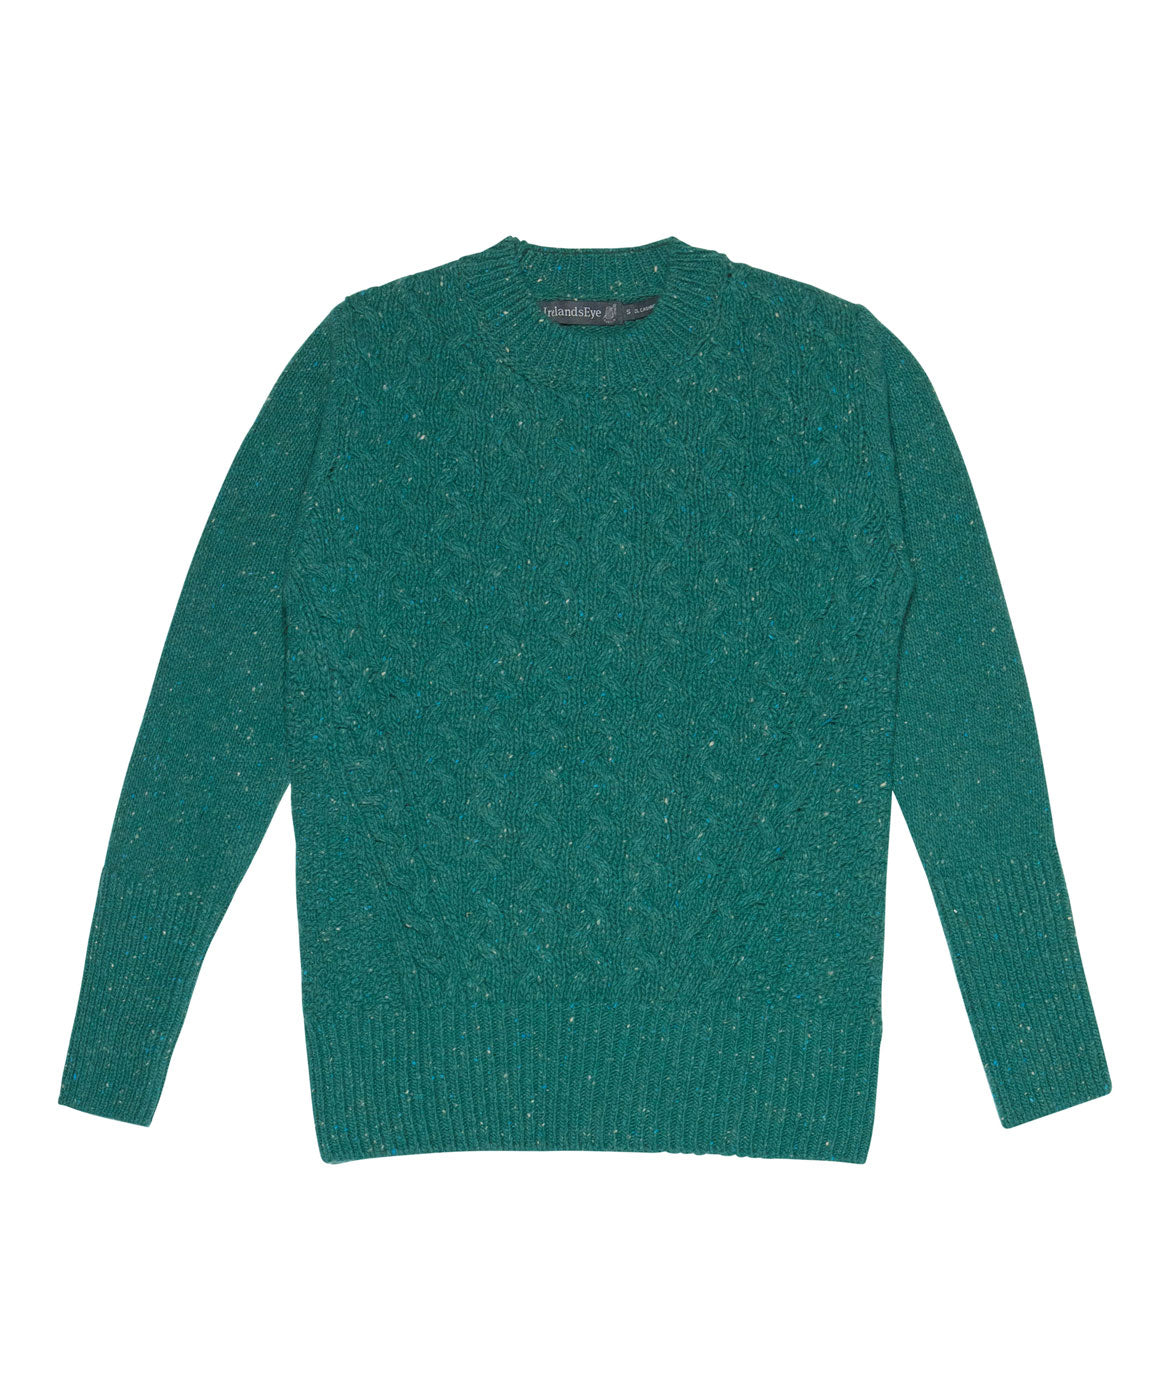 IrelandsEye Knitwear Kilcrea Cable Round Neck Sweater Green Garden